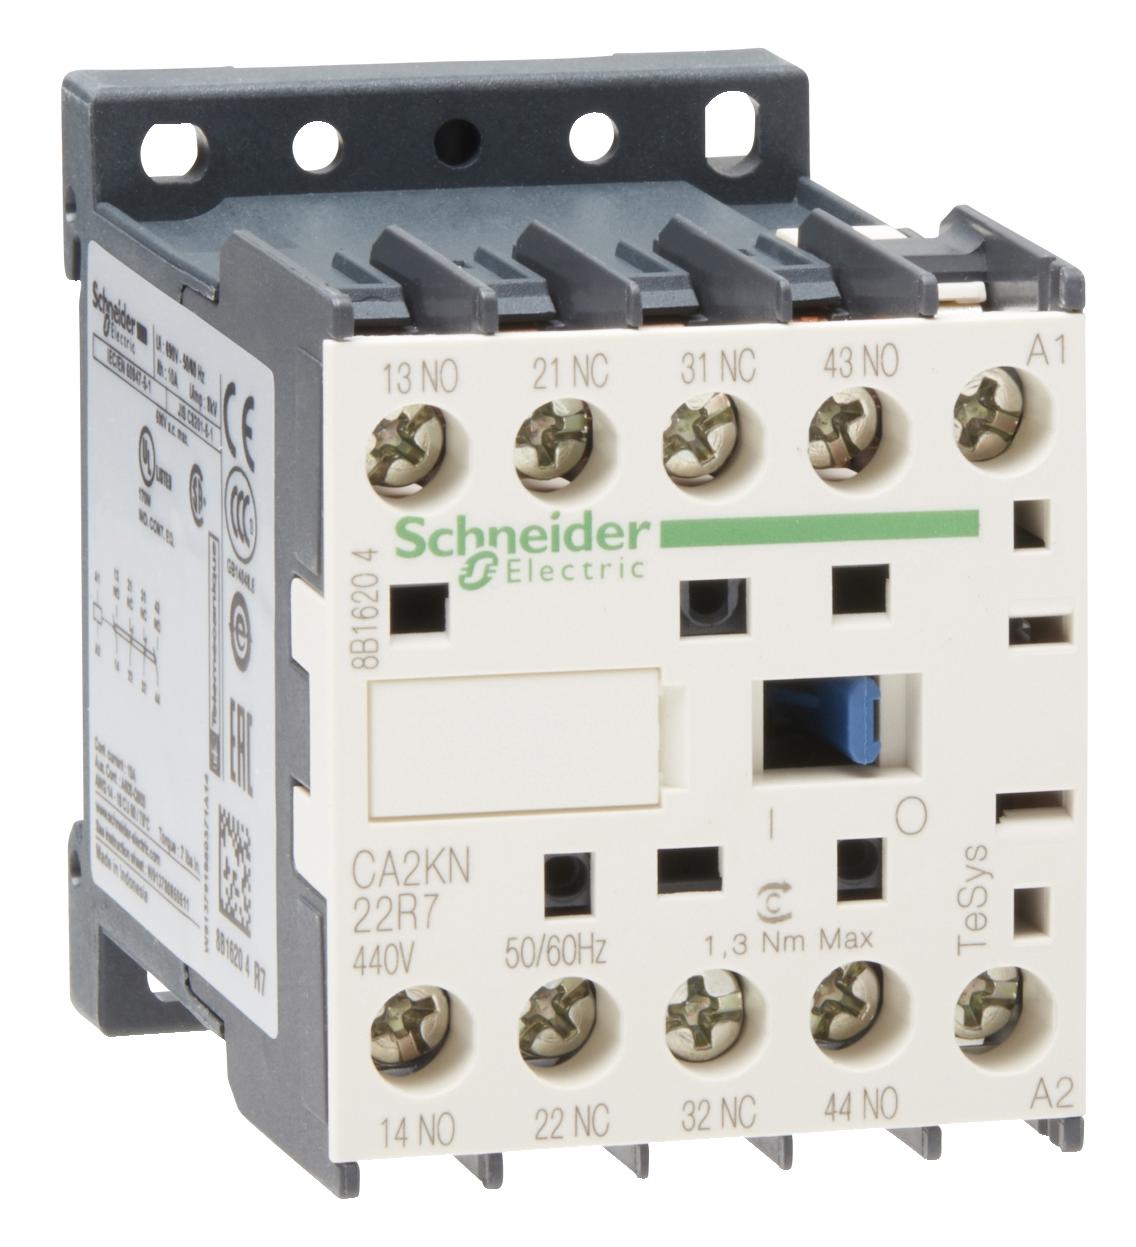 CA2KN22R7 CONTROL RELAY 2NO 2NC CONTACTS SCHNEIDER ELECTRIC